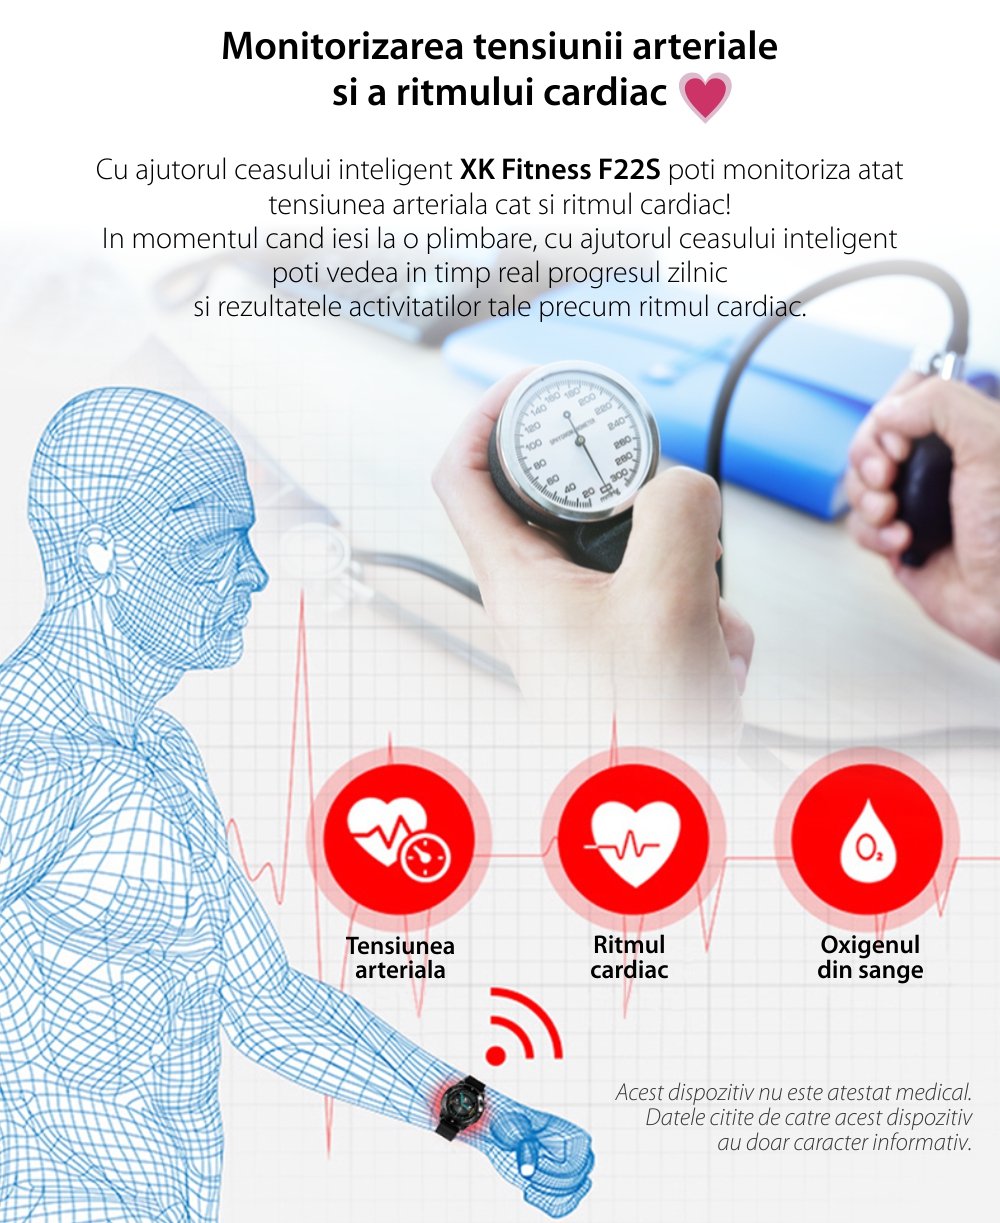 Ceas Smartwatch XK Fitness F22S cu Moduri exercitii, Monitorizare sanatate, Calorii, Pasi, Distanta, Memento sedentar, Negru